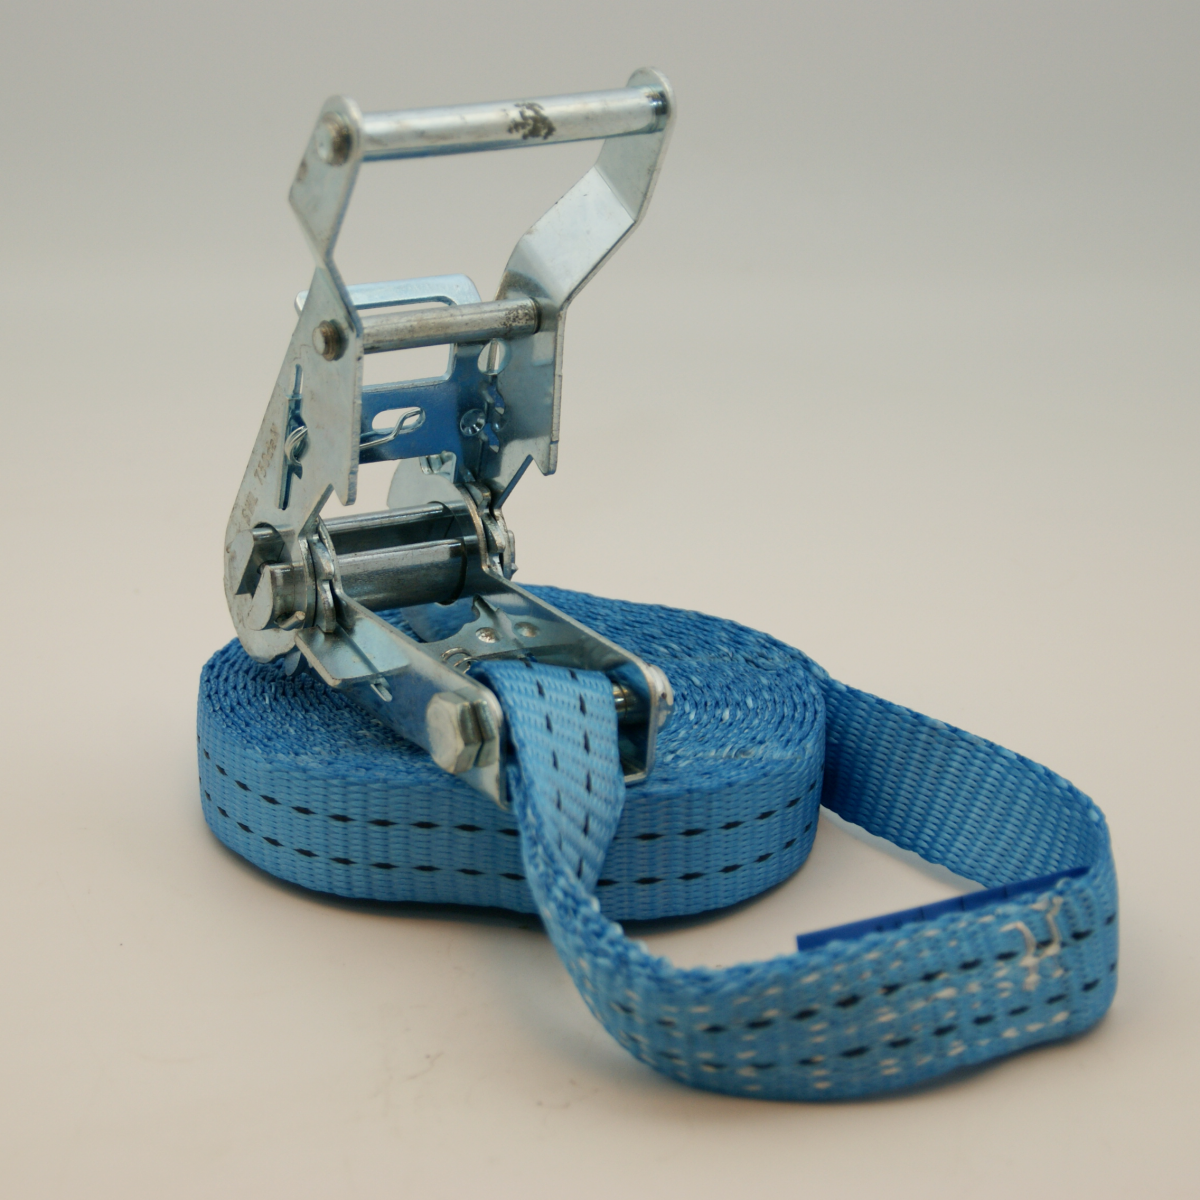 Sjorband: Spanband eindloos blauw, 25mm 1500daN 5m